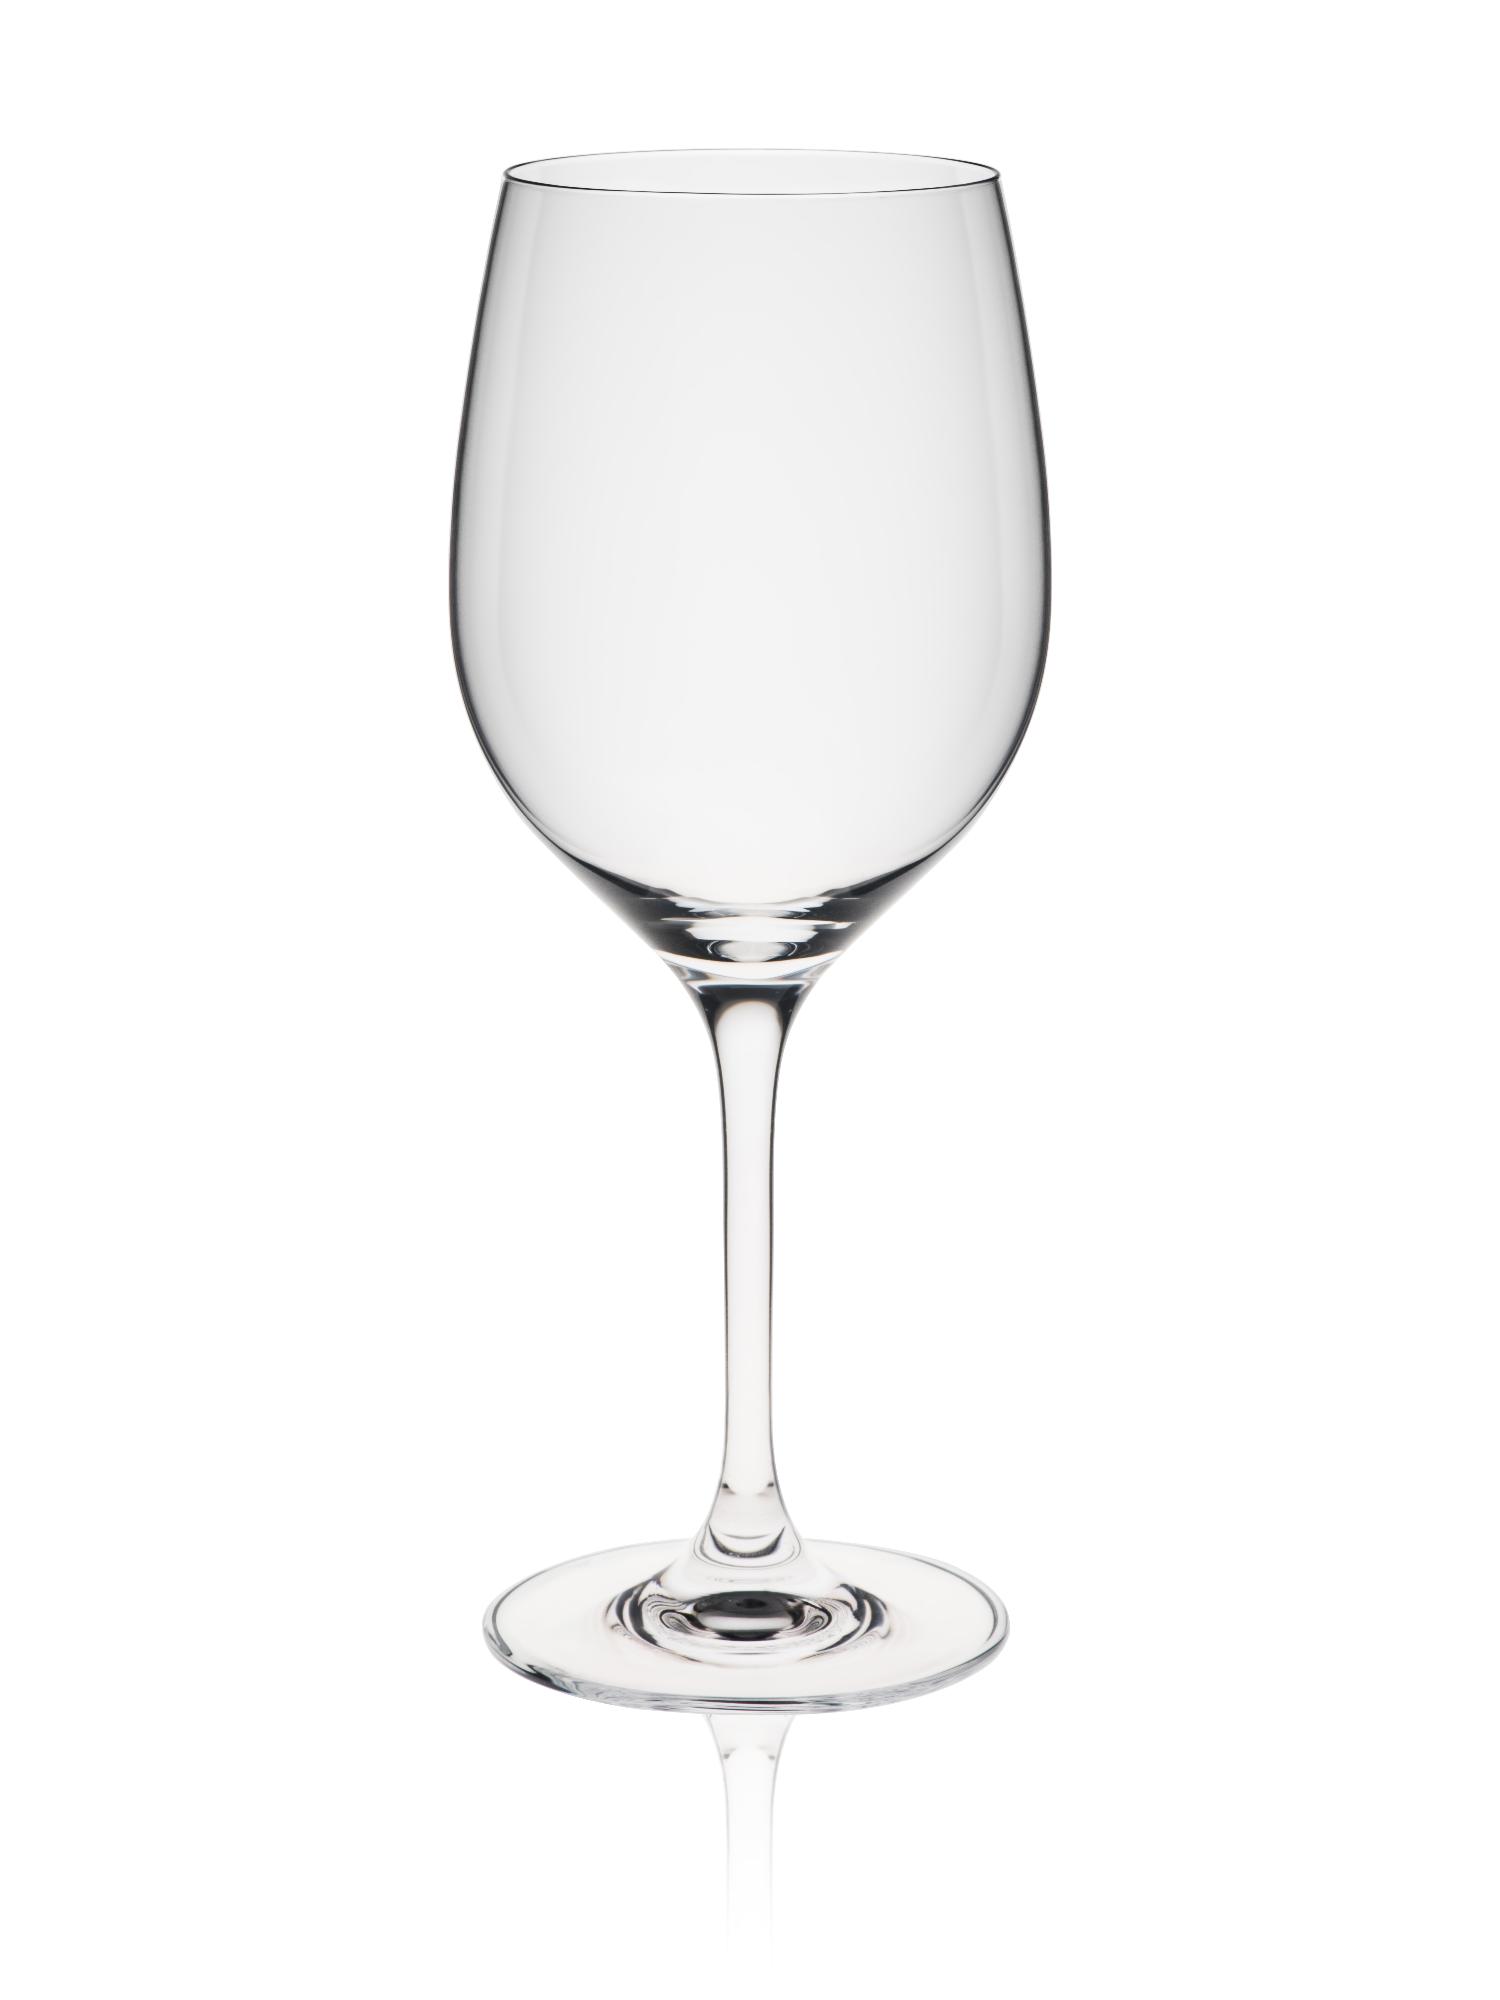 Edition wine glass, 450ml